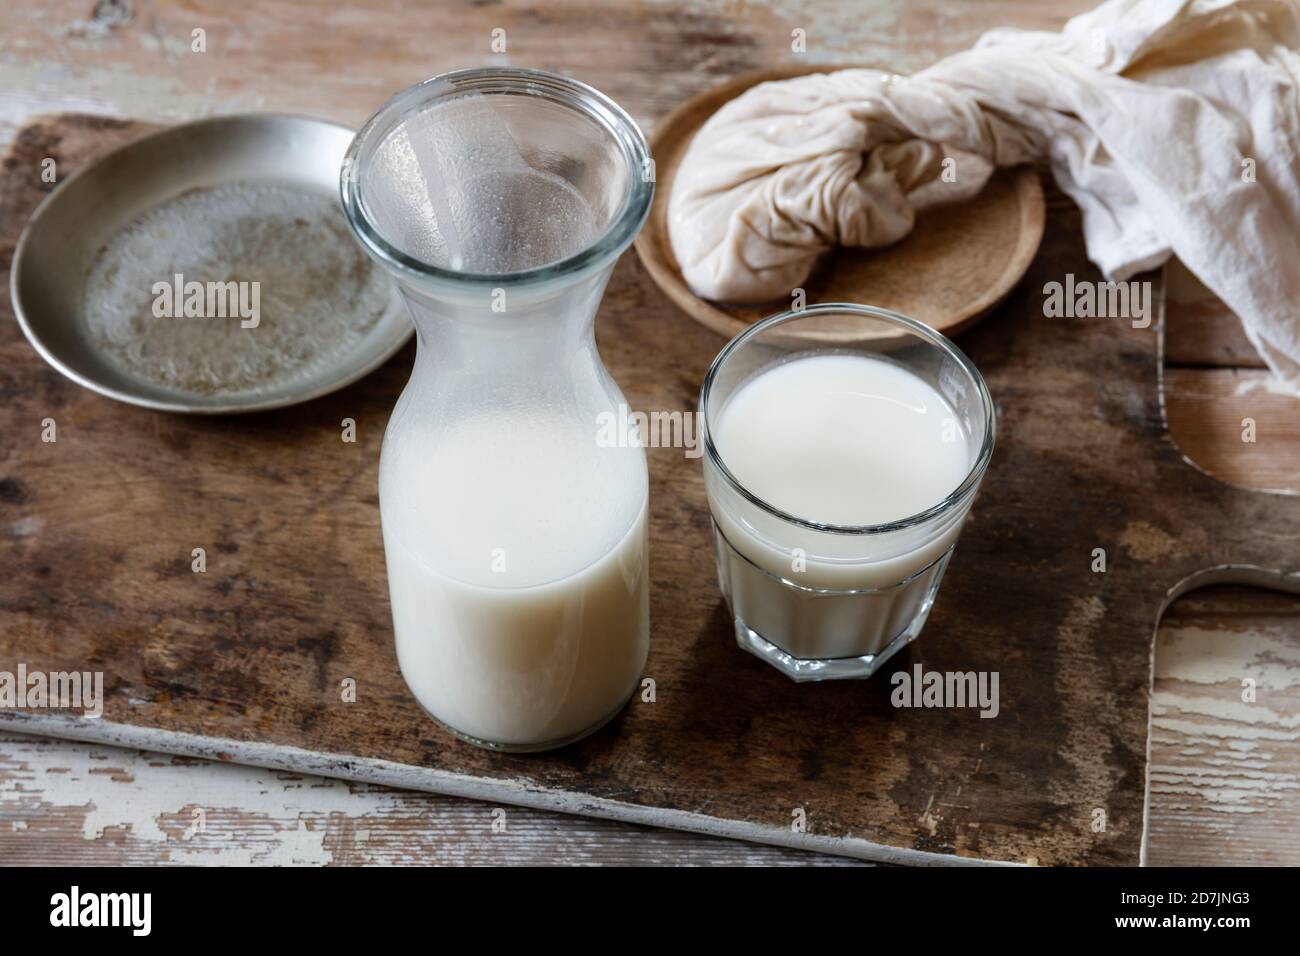 https://c8.alamy.com/comp/2D7JNG3/carafe-and-glass-of-homemade-rice-milk-2D7JNG3.jpg